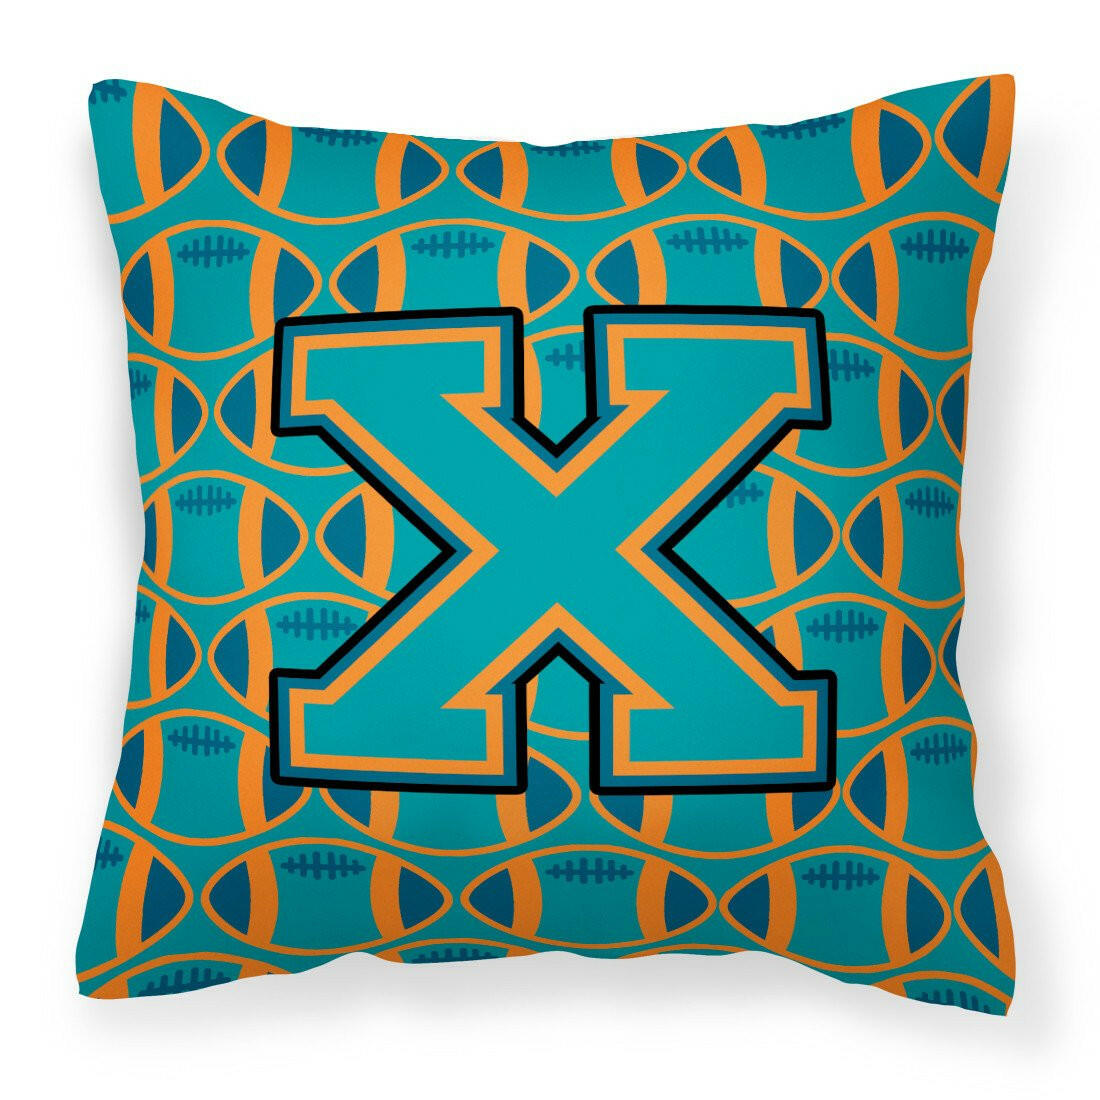 Letter X Football Aqua, Orange and Marine Blue Fabric Decorative Pillow CJ1063-XPW1414 by Caroline's Treasures